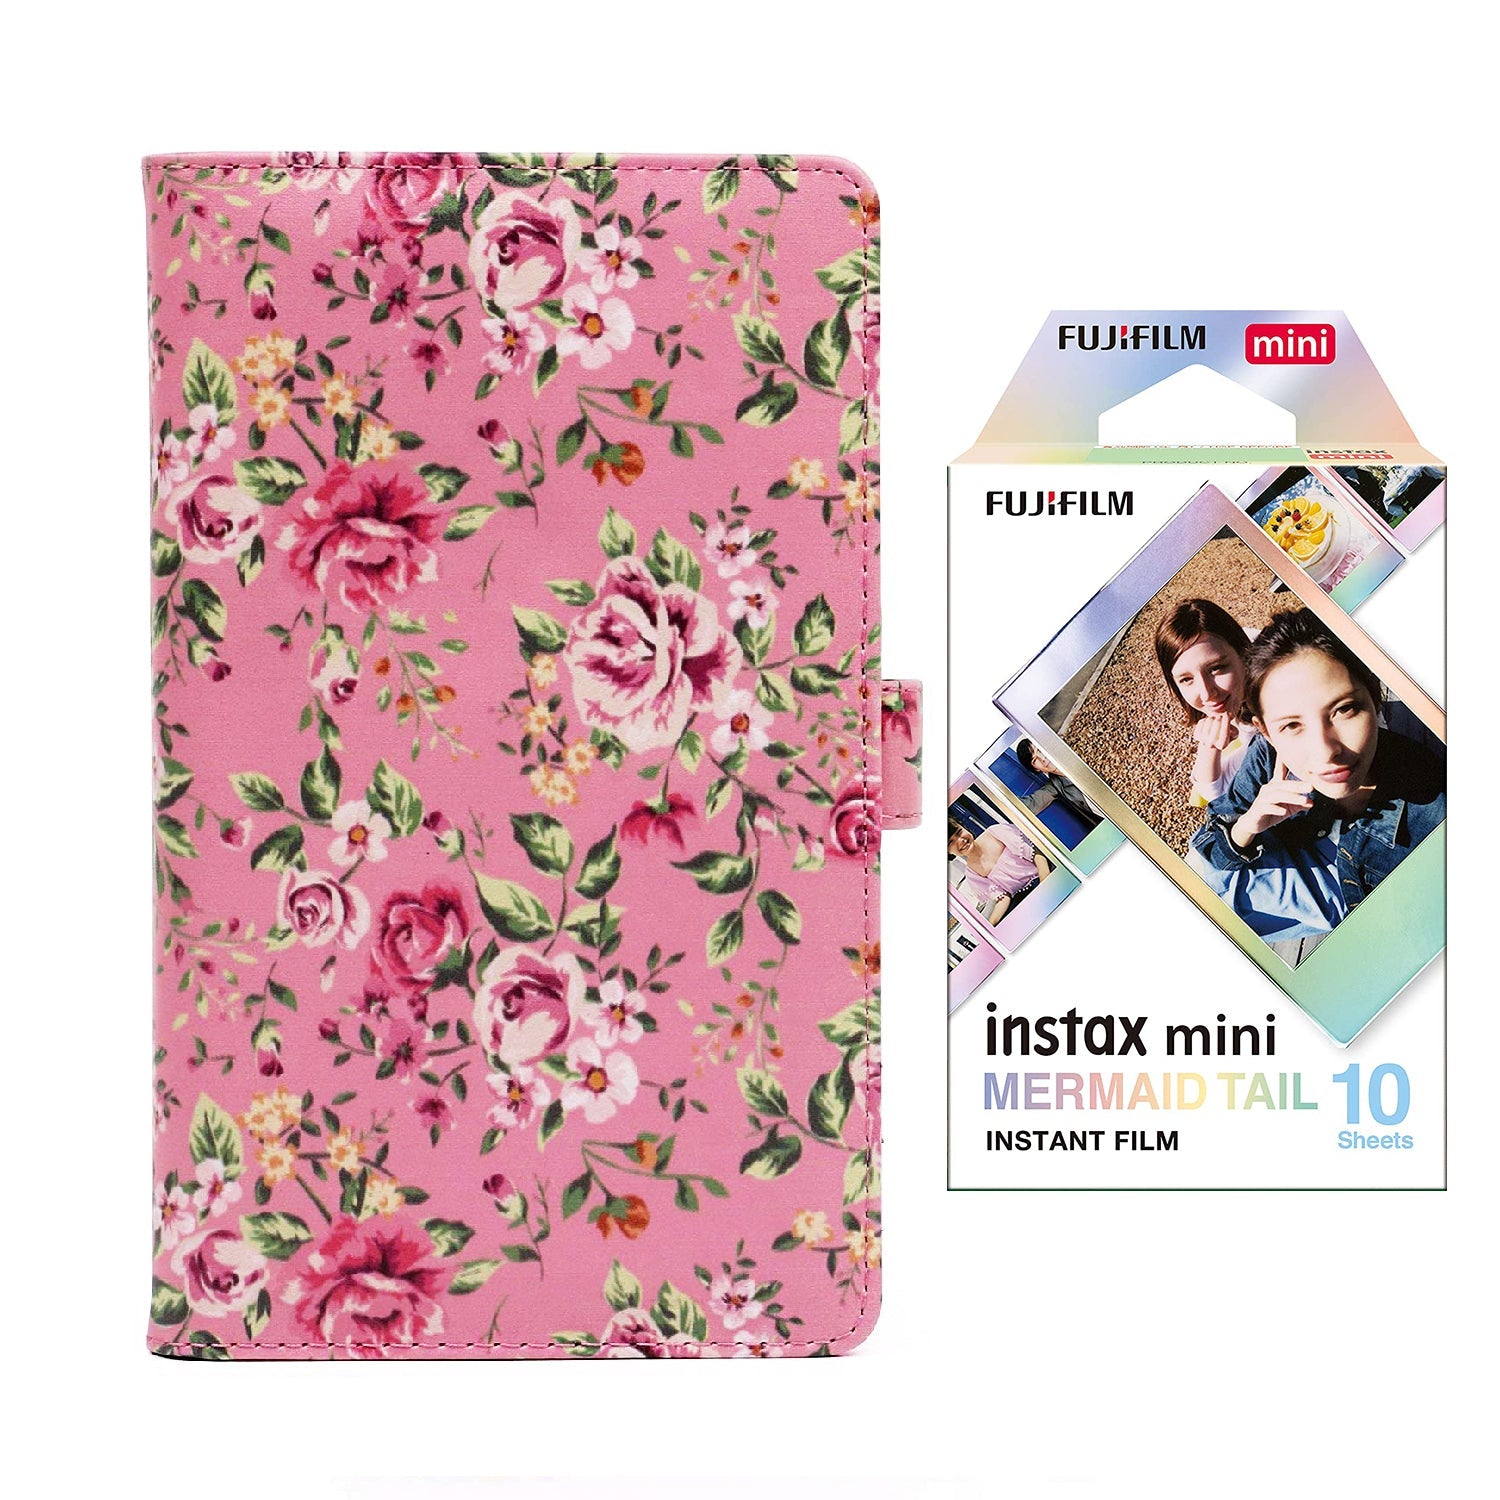 Fujifilm Instax Mini 10X1 mermaid tail Instant Film with 96-sheet Album for mini film  (Pink rose)